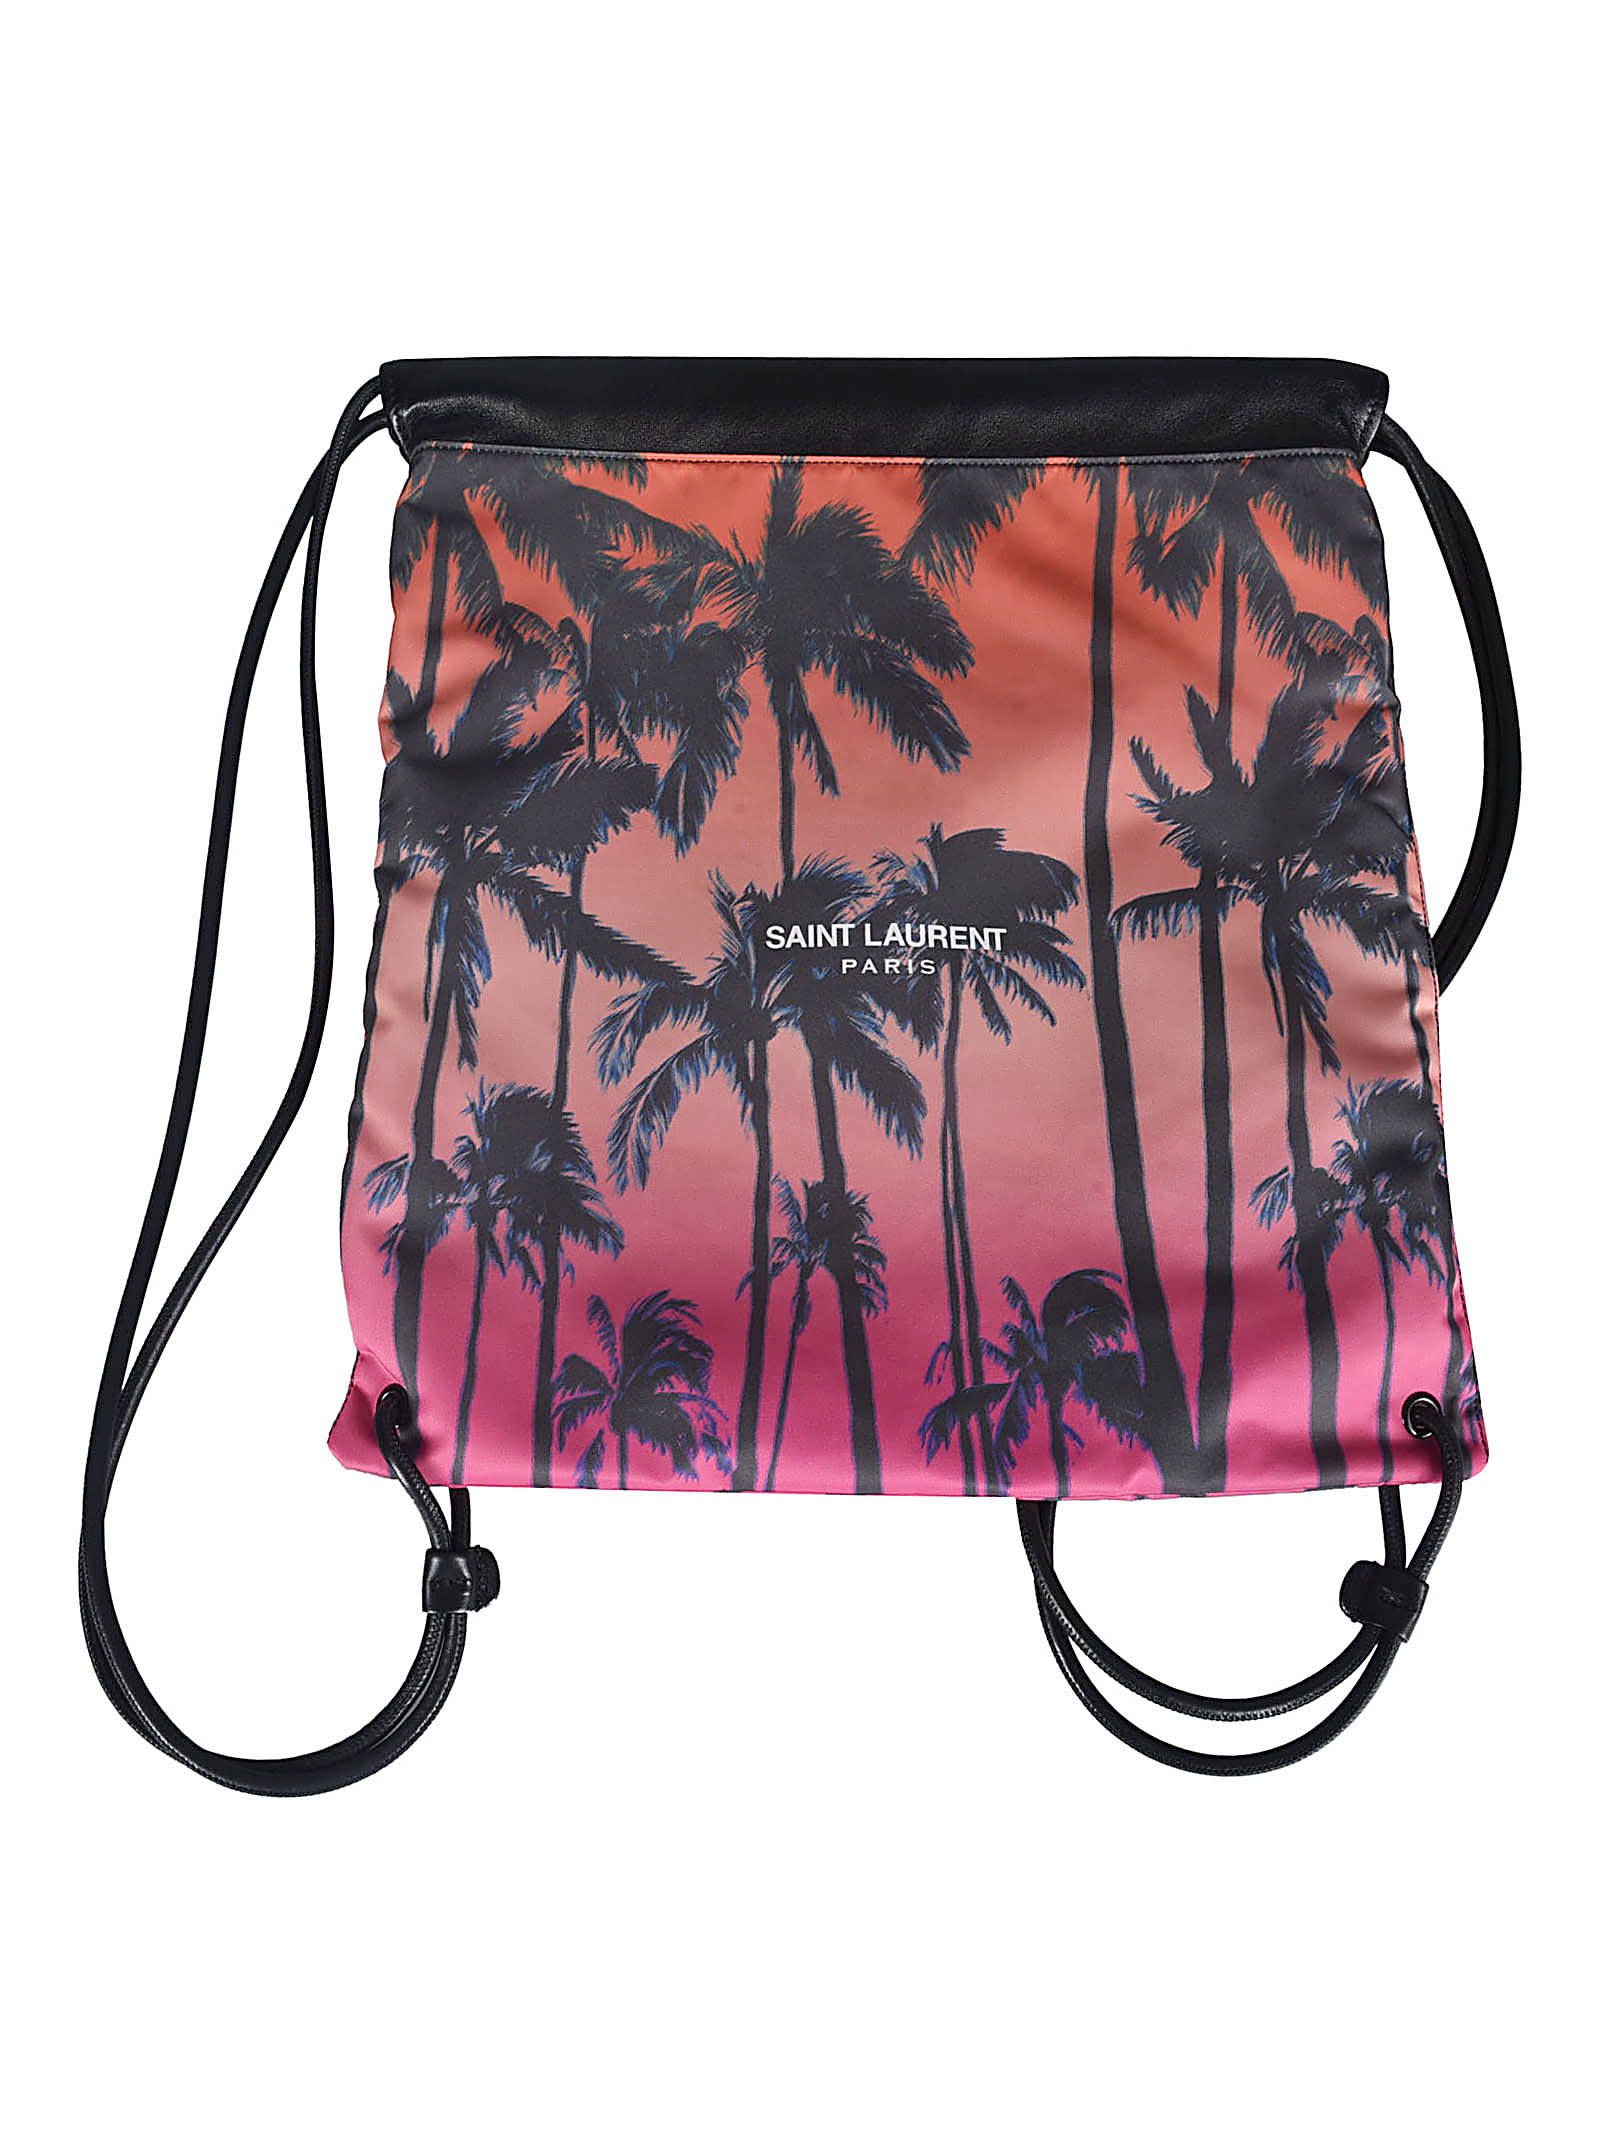 Saint Laurent Tropical Bucket Backpack In Orange/black/pink